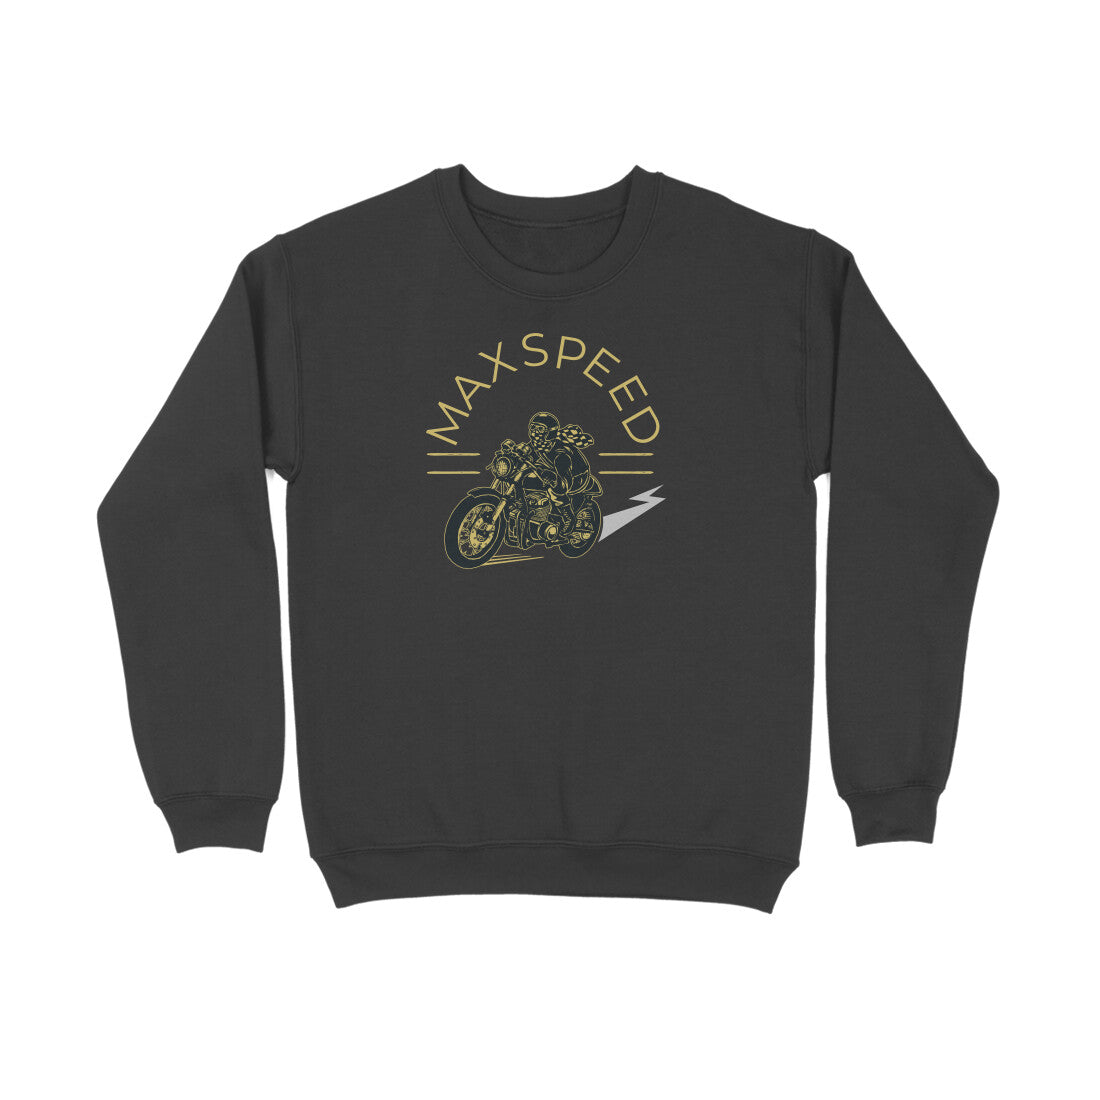 Bilkool Maxspeed Cotton Sweatshirt